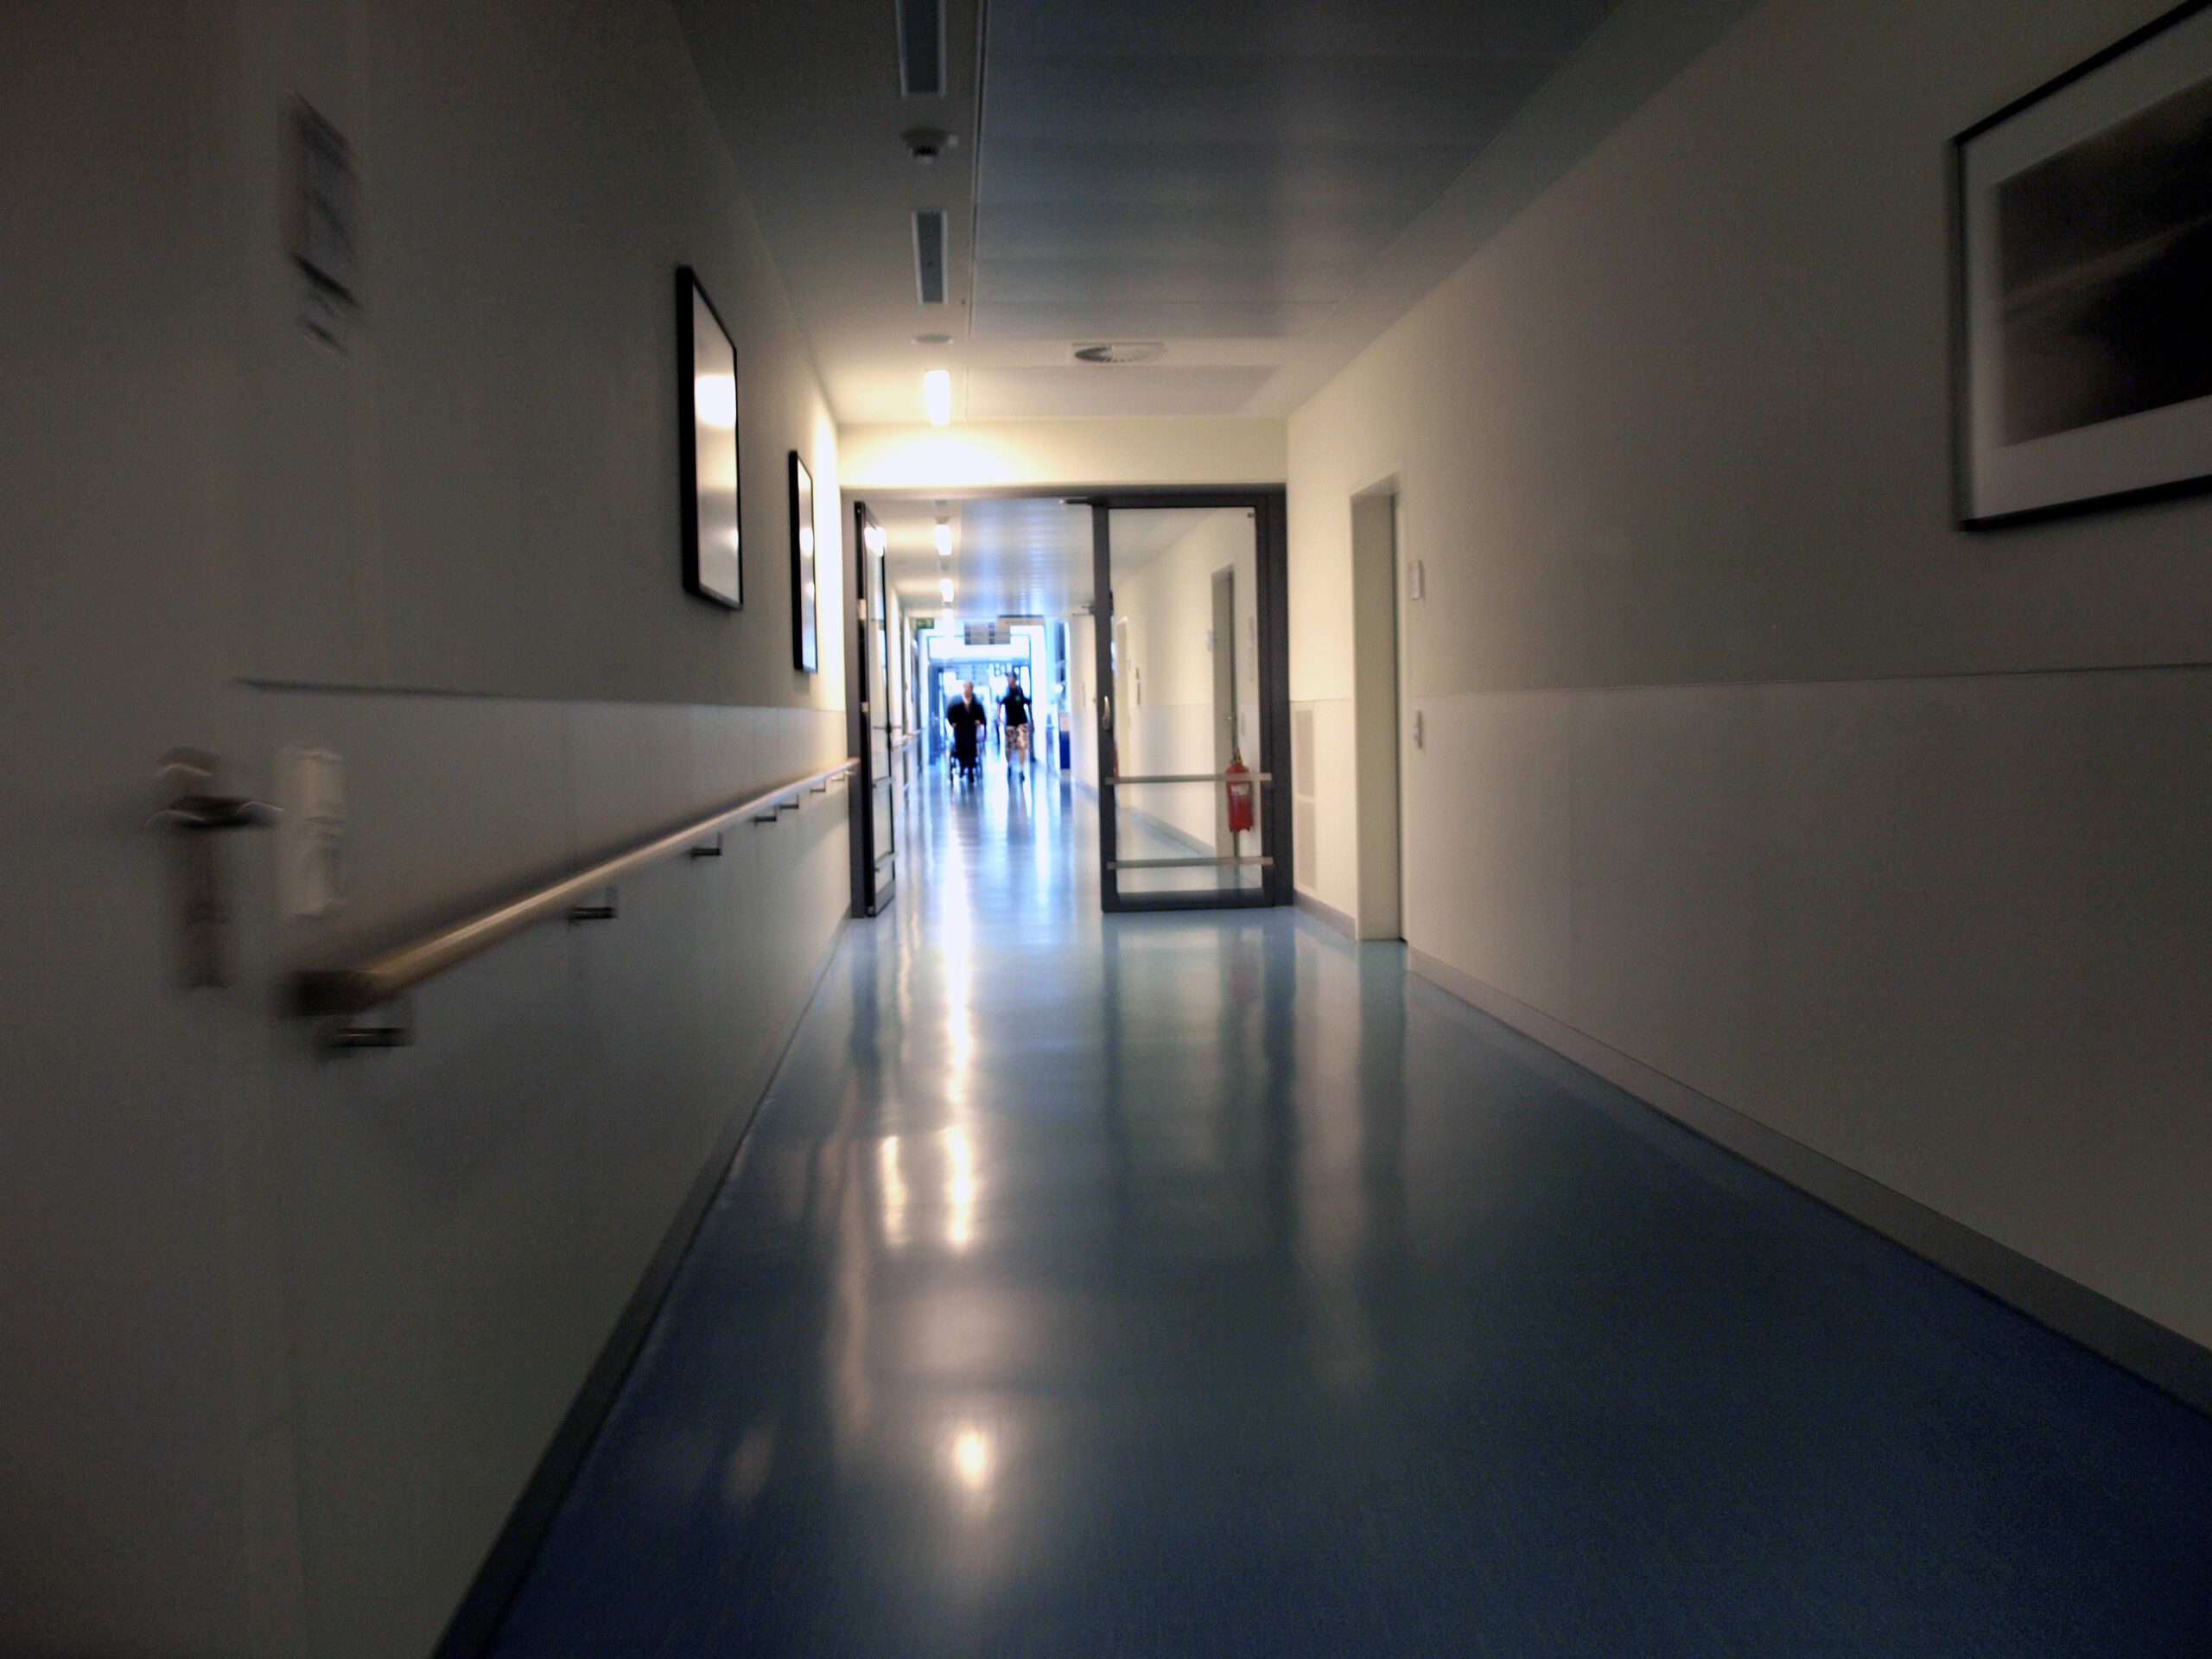 Hospital hallway